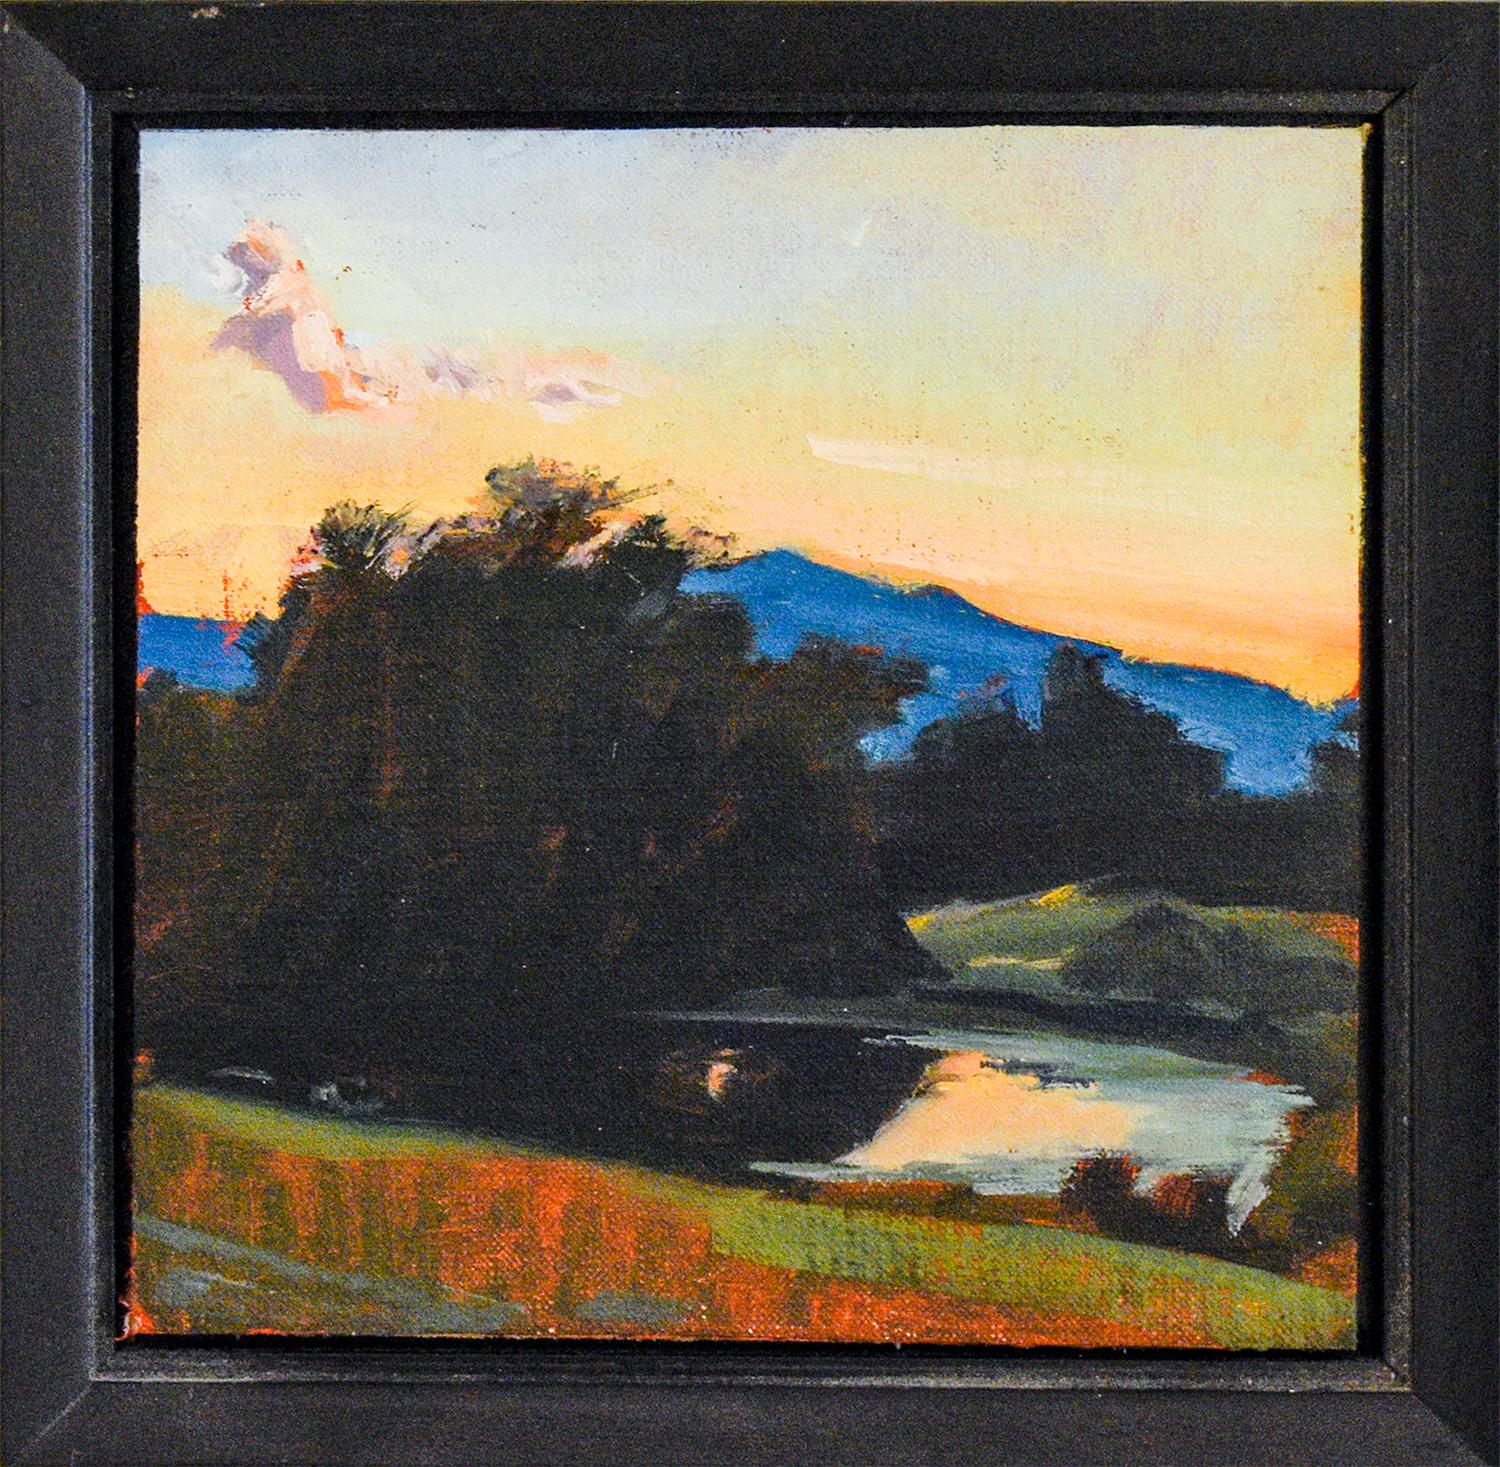 Autumn Landscape: Framed Hudson ValIey Impressionist En Plein Air Oil Painting